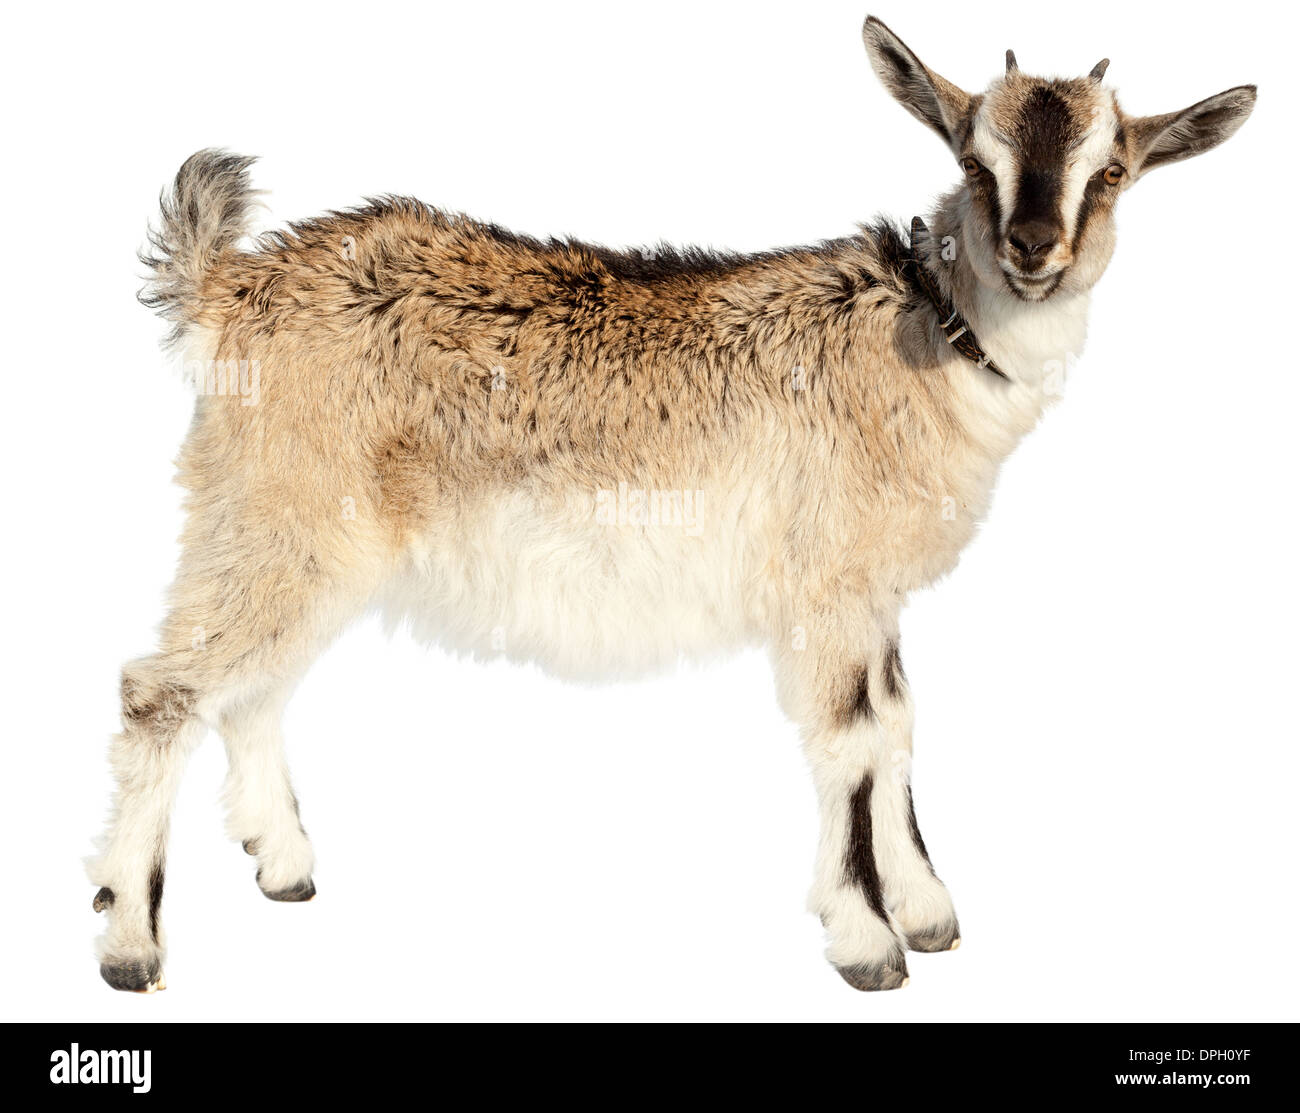 Goat on a white background. Stock Photo